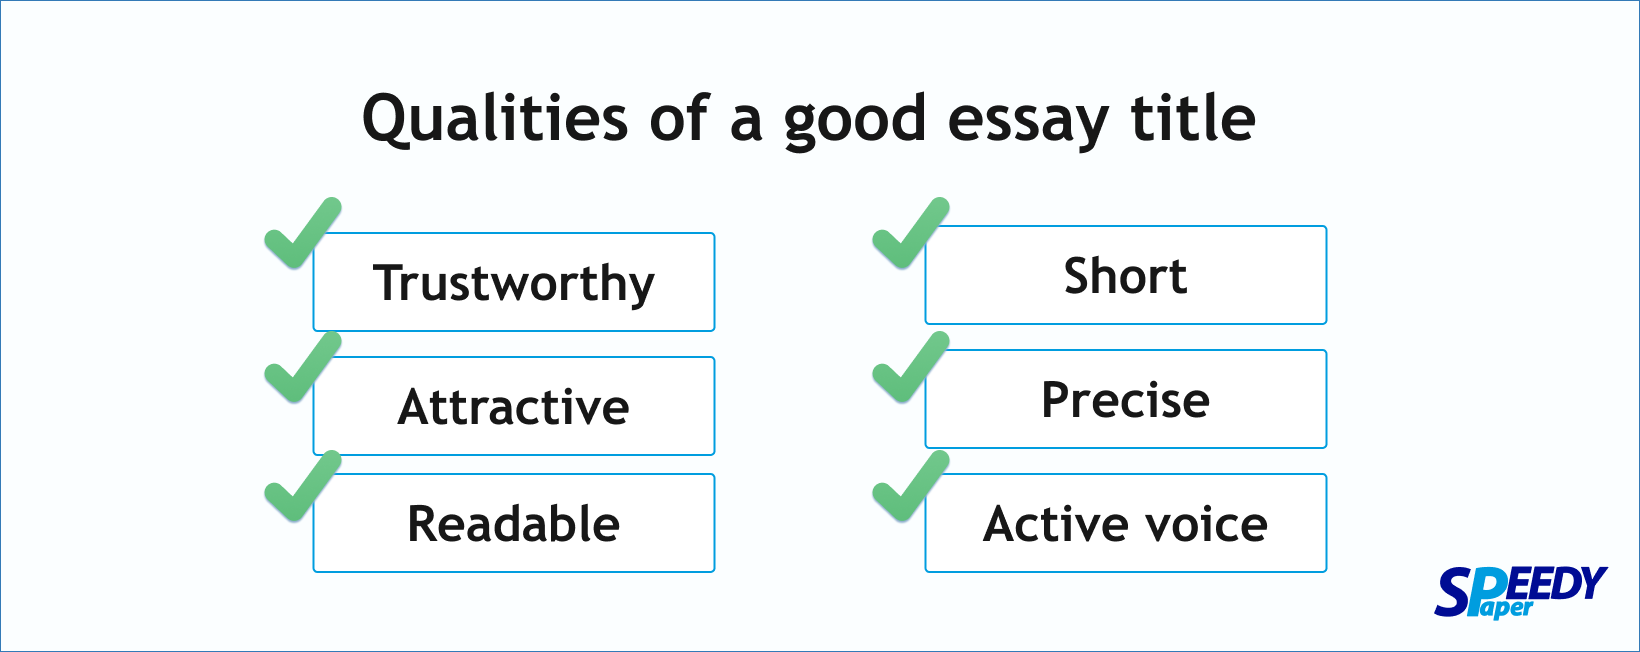 subjective essay titles